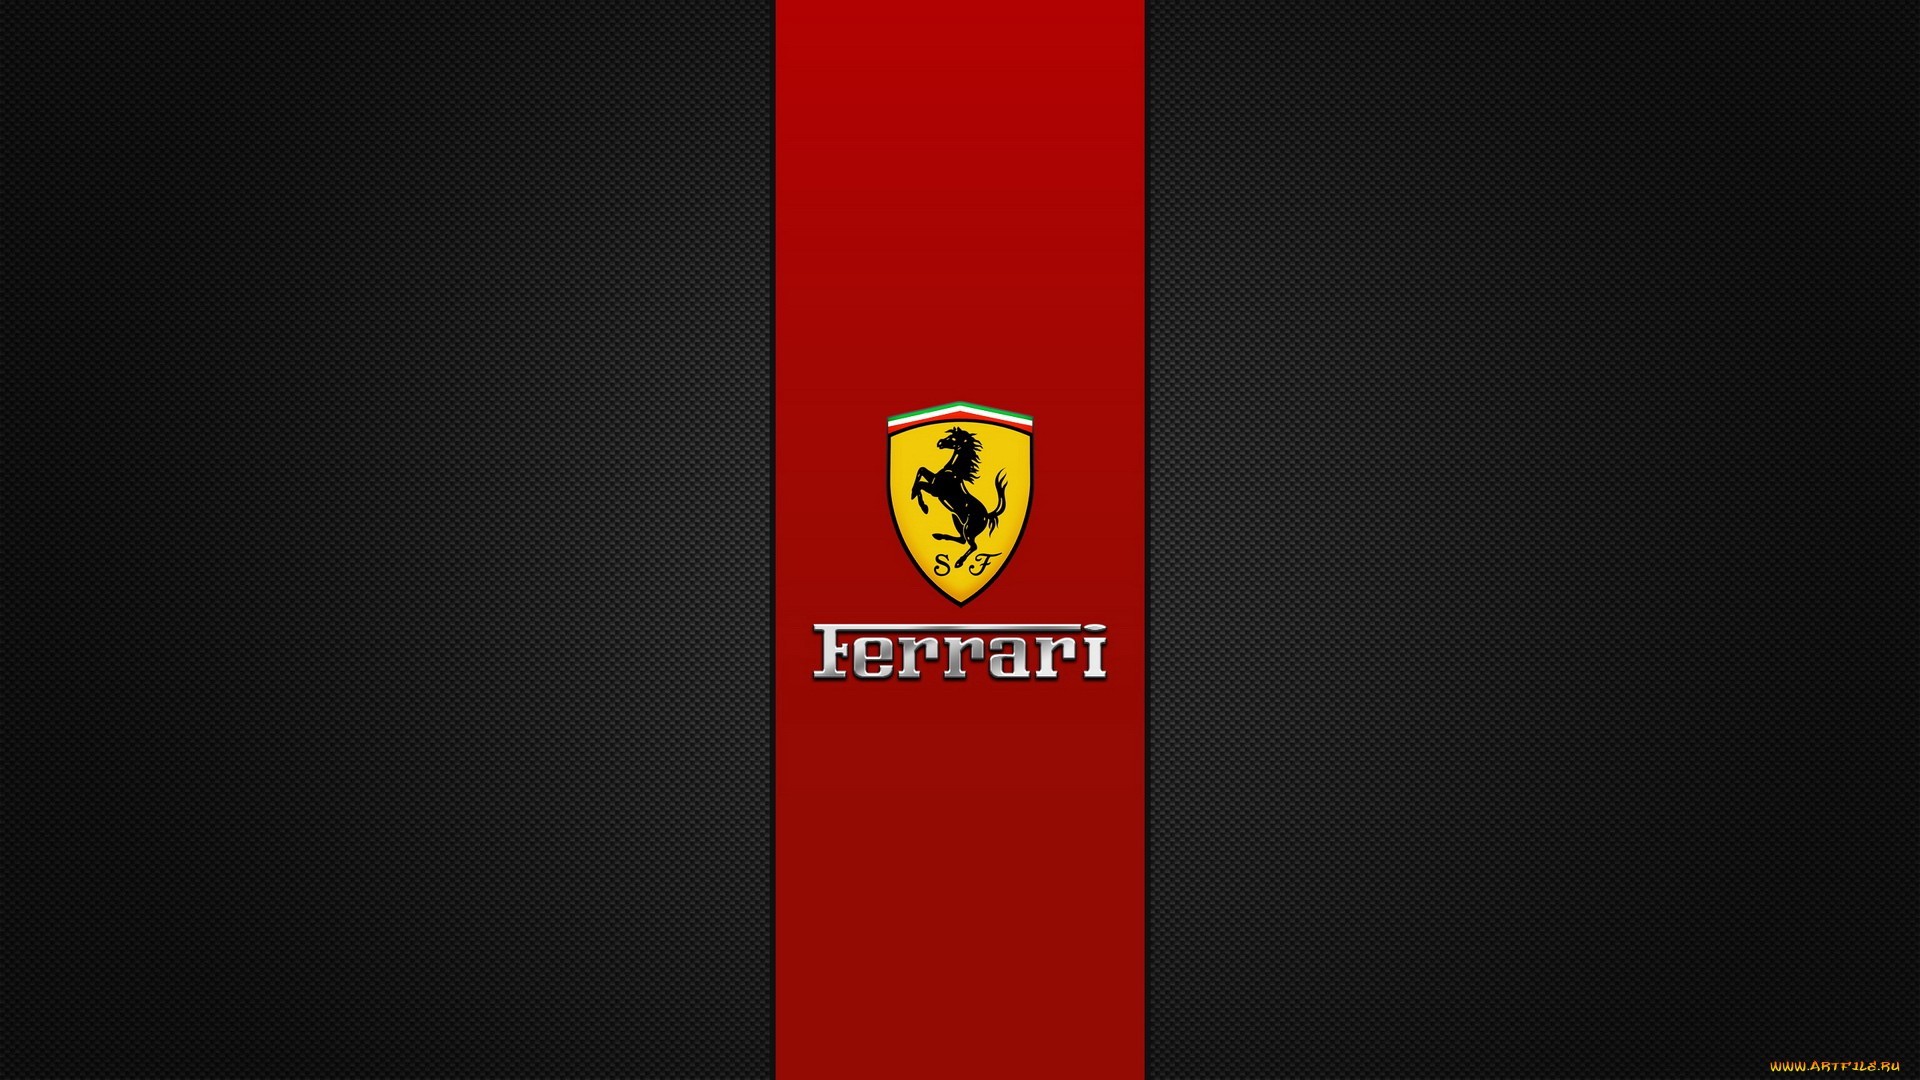 Ferrari Desktop home screen wallpaper